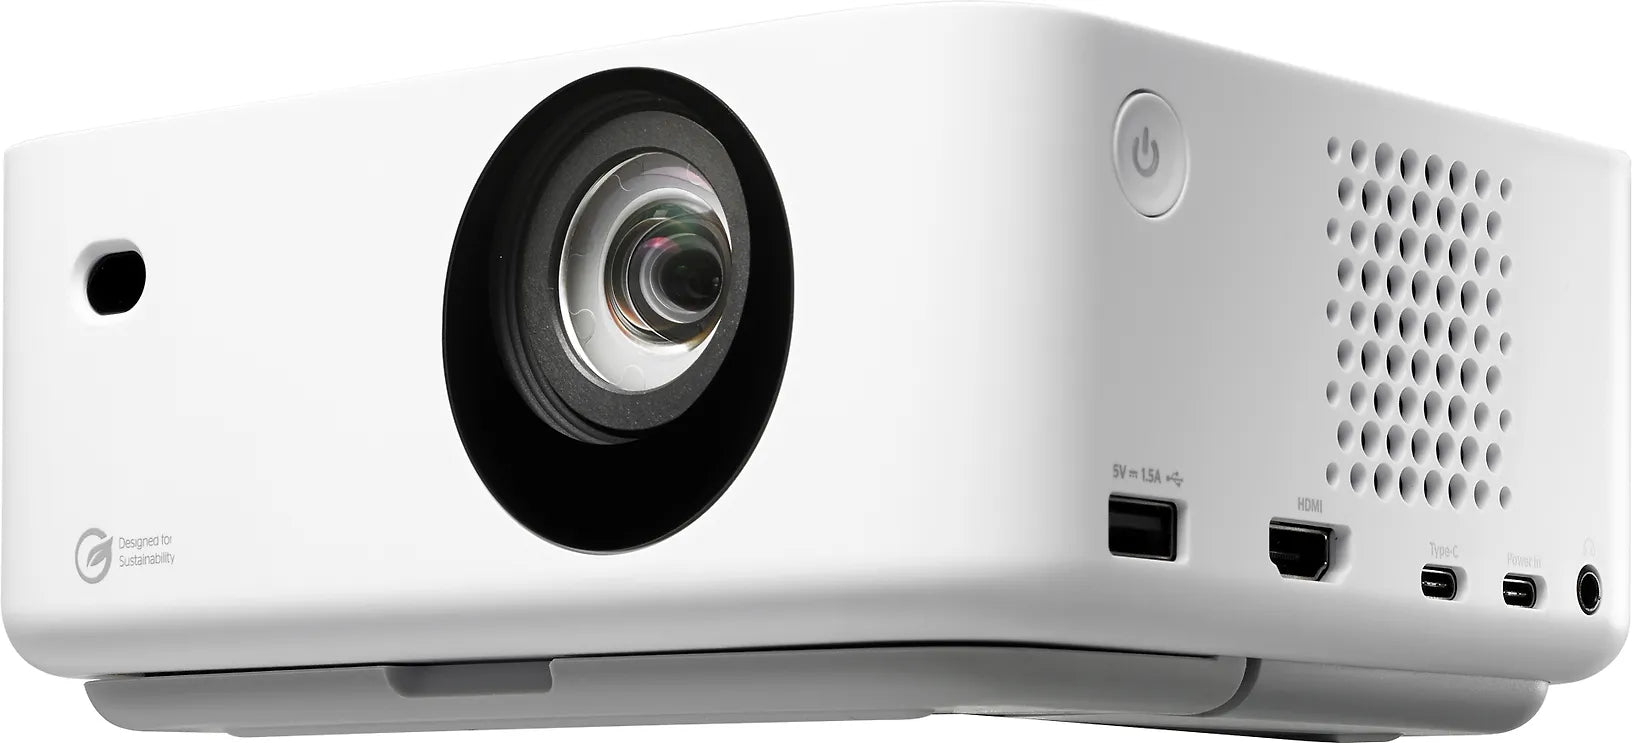 Optoma ML1080 Full HD RGB portable mini projector